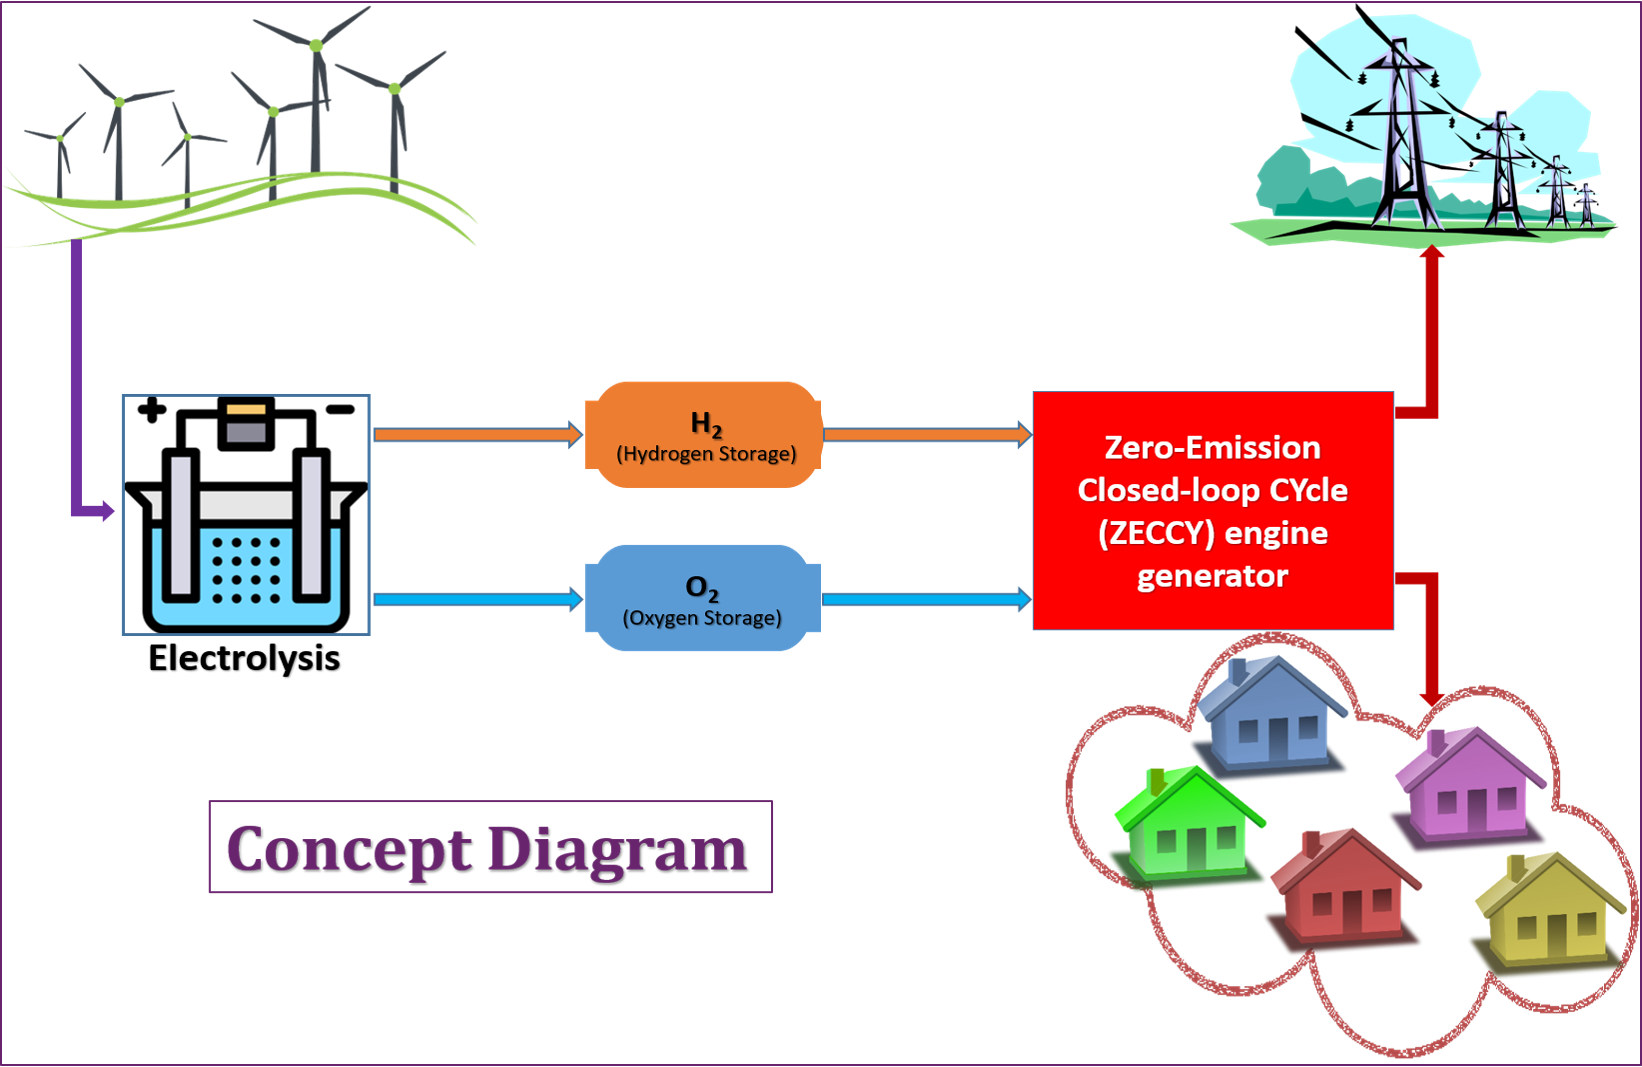 Zero Emission Closed Cycle (ZECCY) engine concept diagram